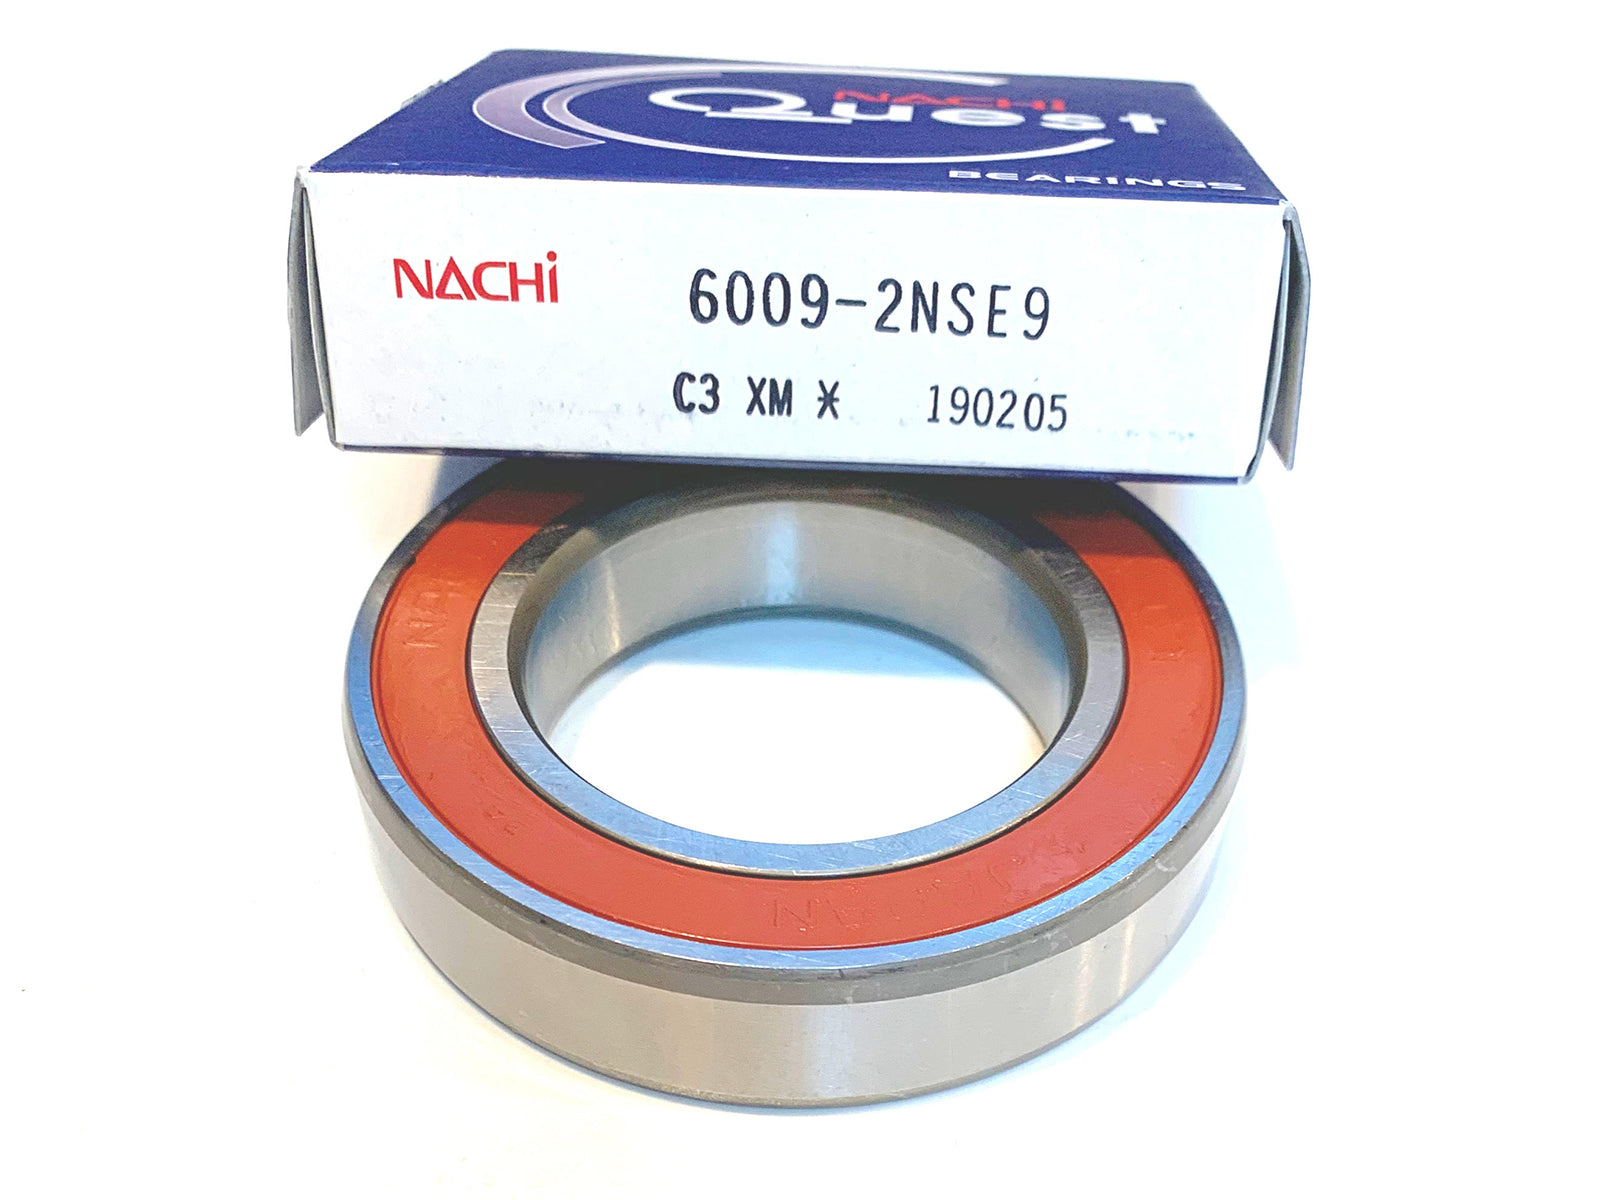 6009-2NSE9 C3 NACHI Ball Bearing - ppdistributors